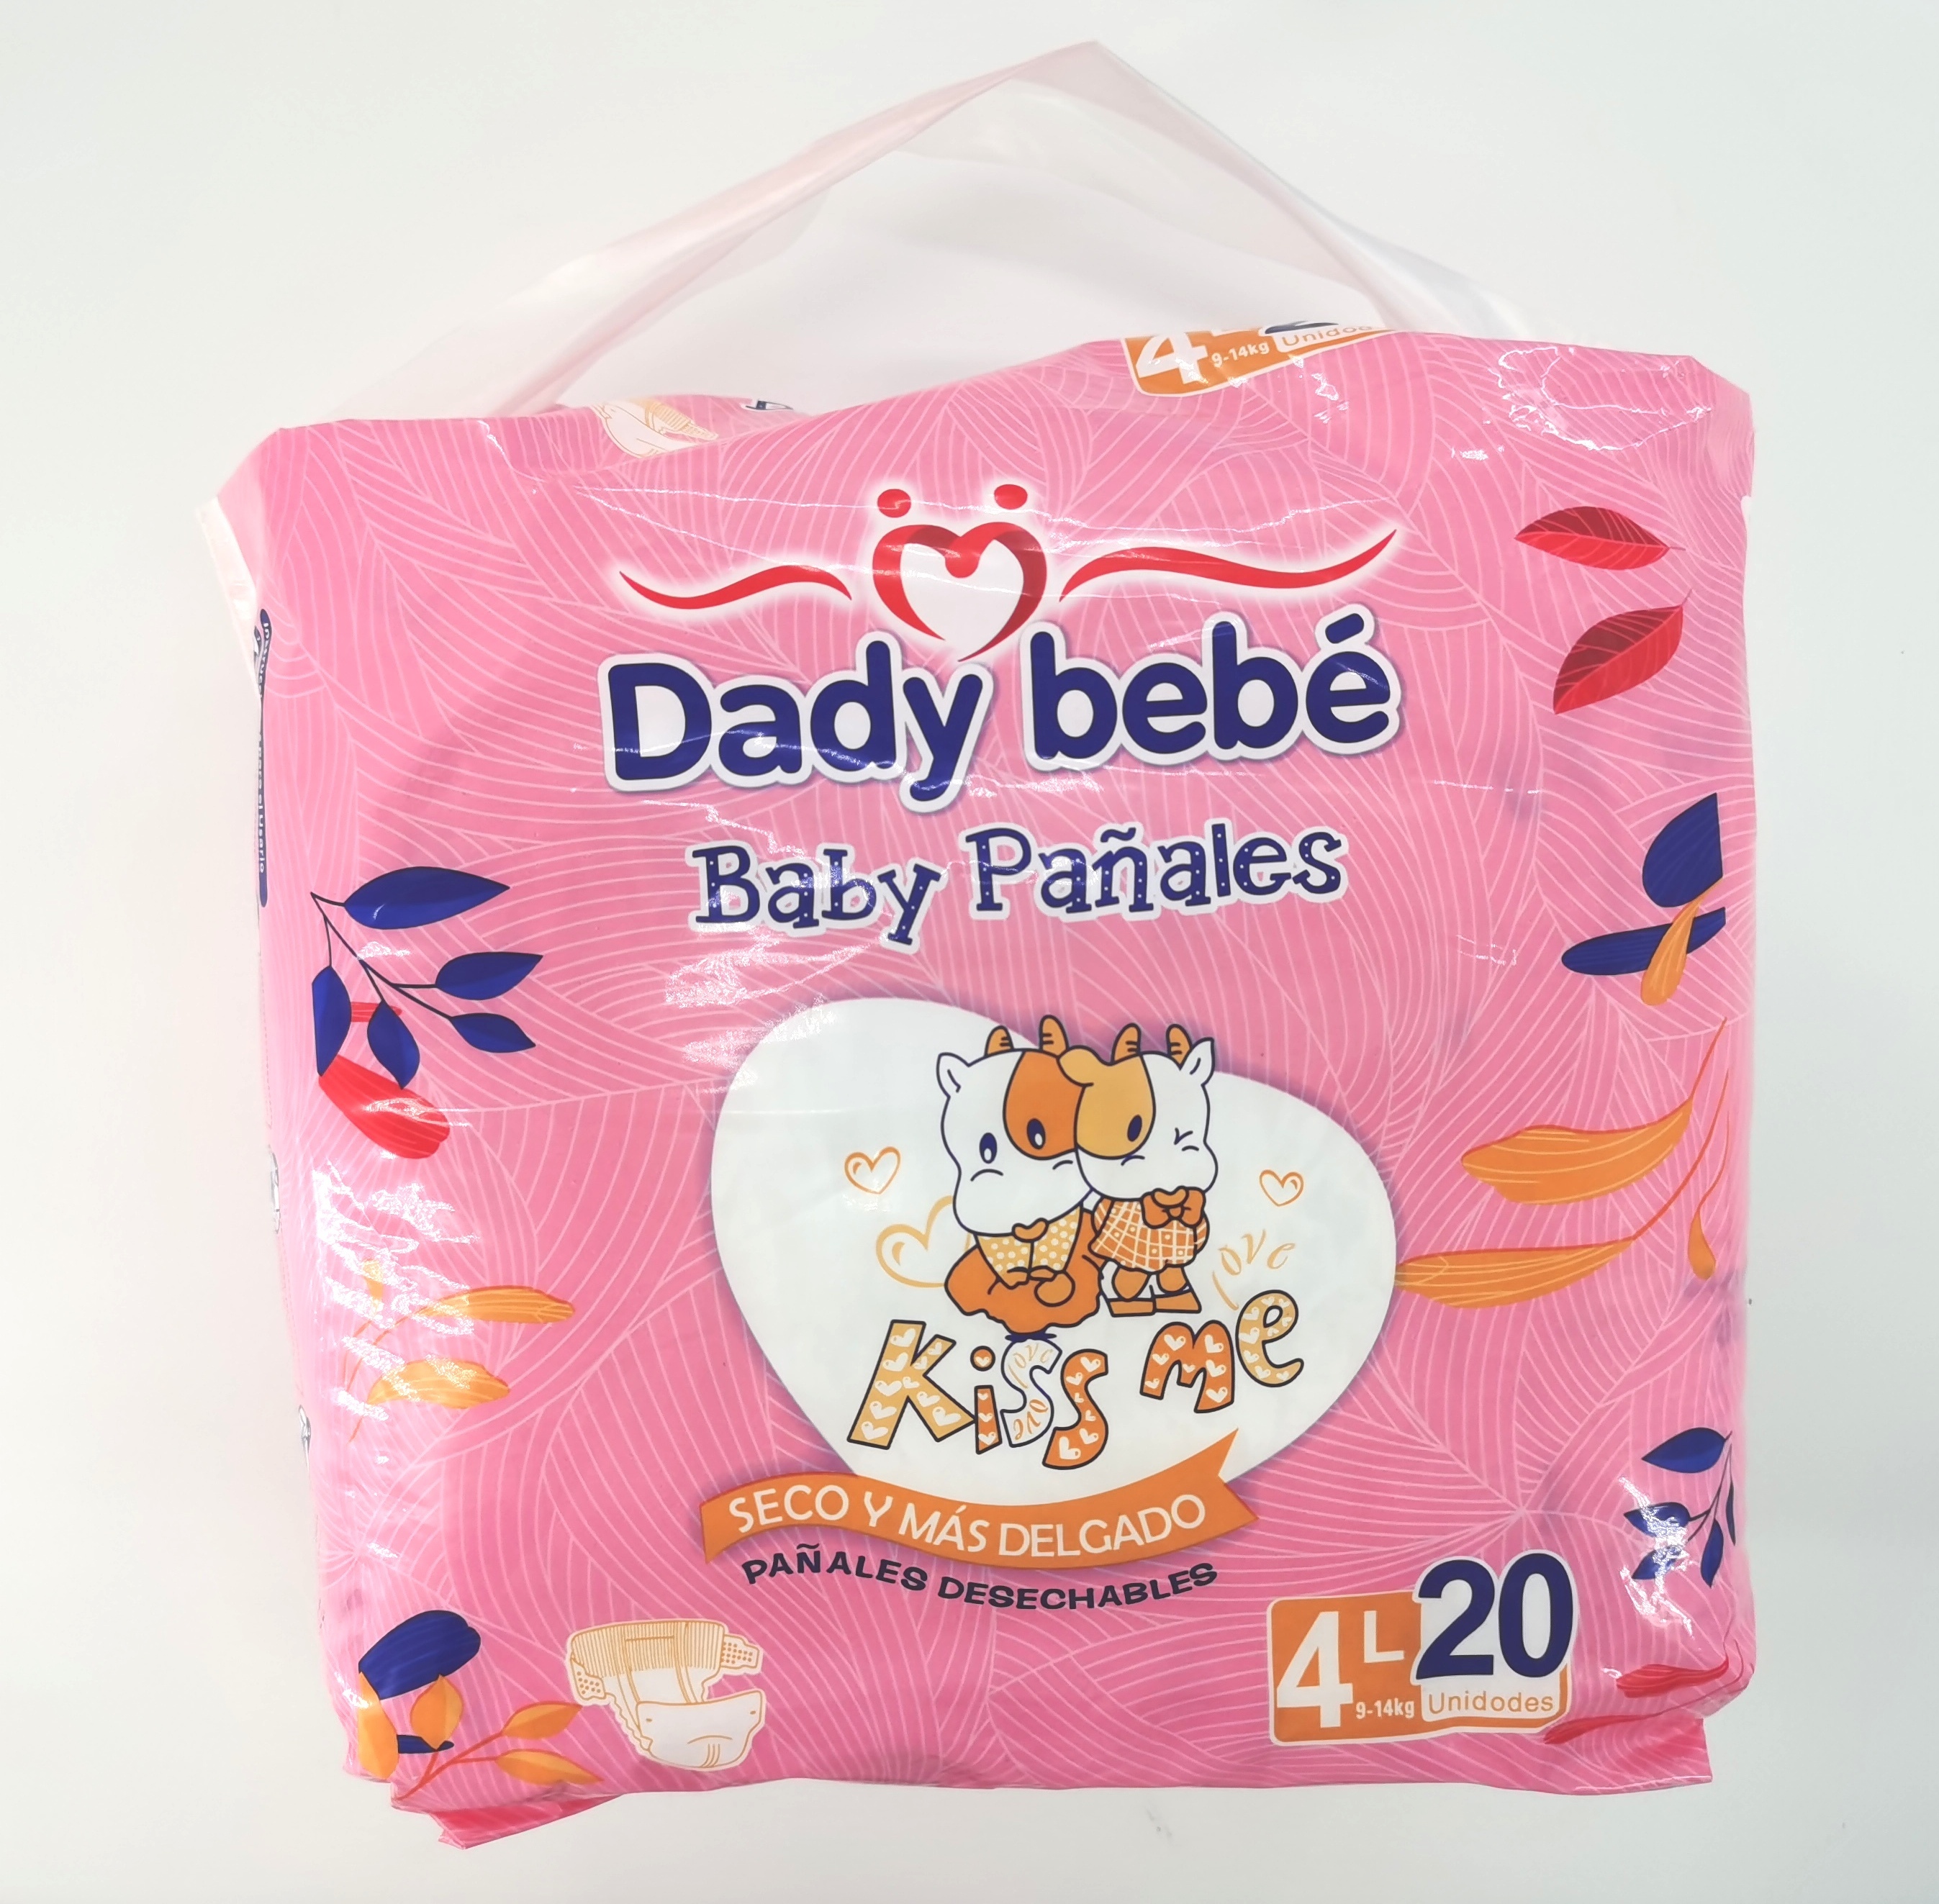 Wholesale Price China Diaper In Public - Baby diapers Japan santi Baby nappies Manufacturers Nigeria Africa Vietnam Market disposable diaper pad pull up pants panties – Ensha